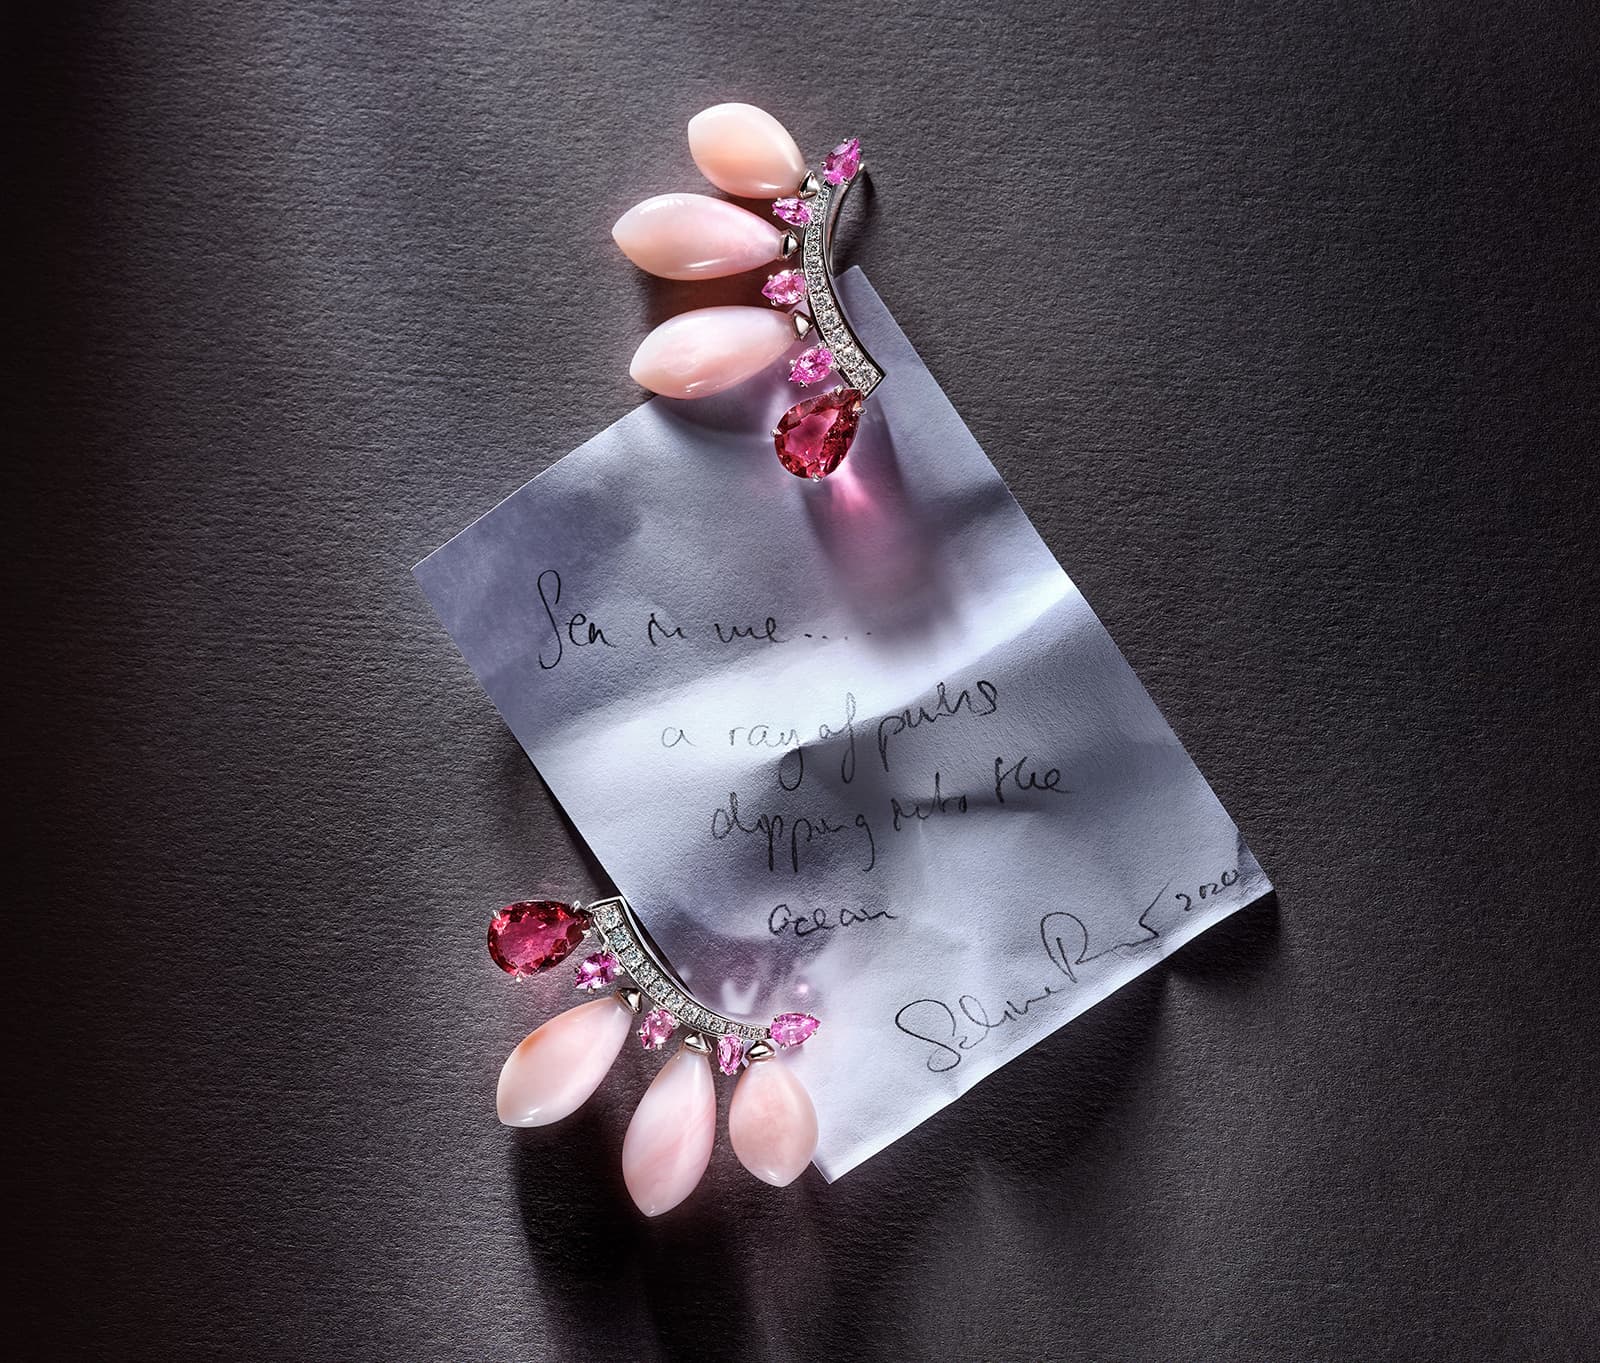 Серьги Grace от Sabine Roemer с турмалином, "каплями" розового опала, розовыми сапфирами и бриллиантами 0,71 карата